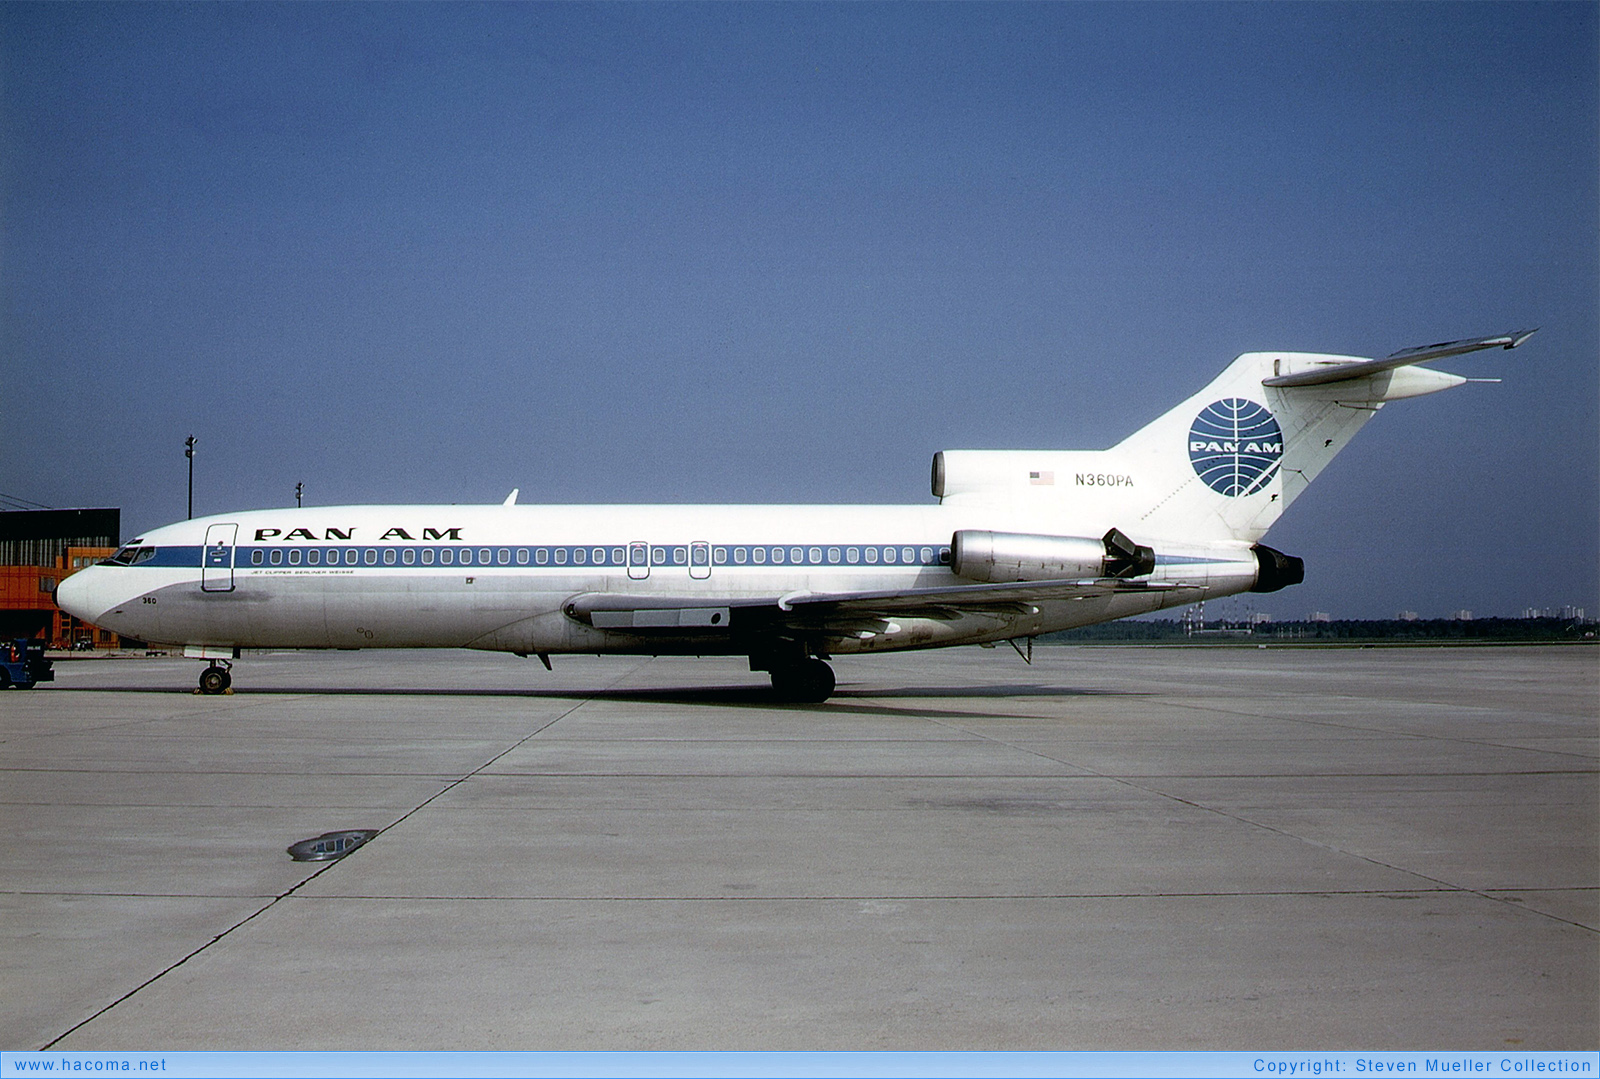 Foto von N360PA - Pan Am Clipper Golden Rule / Berliner Baer / Berliner Weisse - Flughafen Berlin-Tegel - 1981